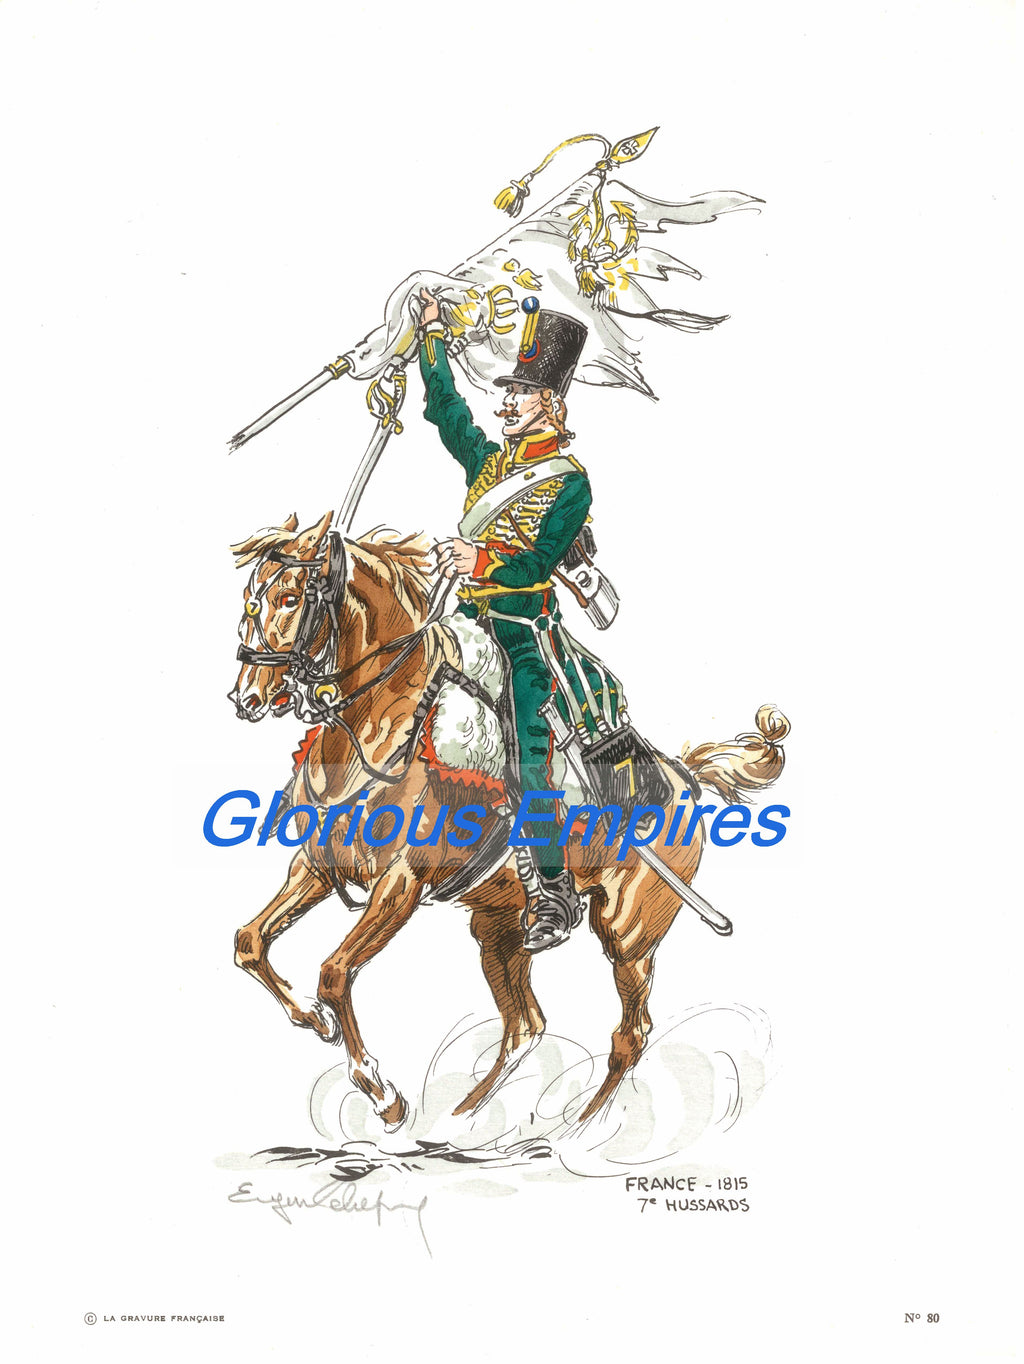 print 80 : France, 7eme Hussards, 18 - Glorious Empires-Historical Miniatures  